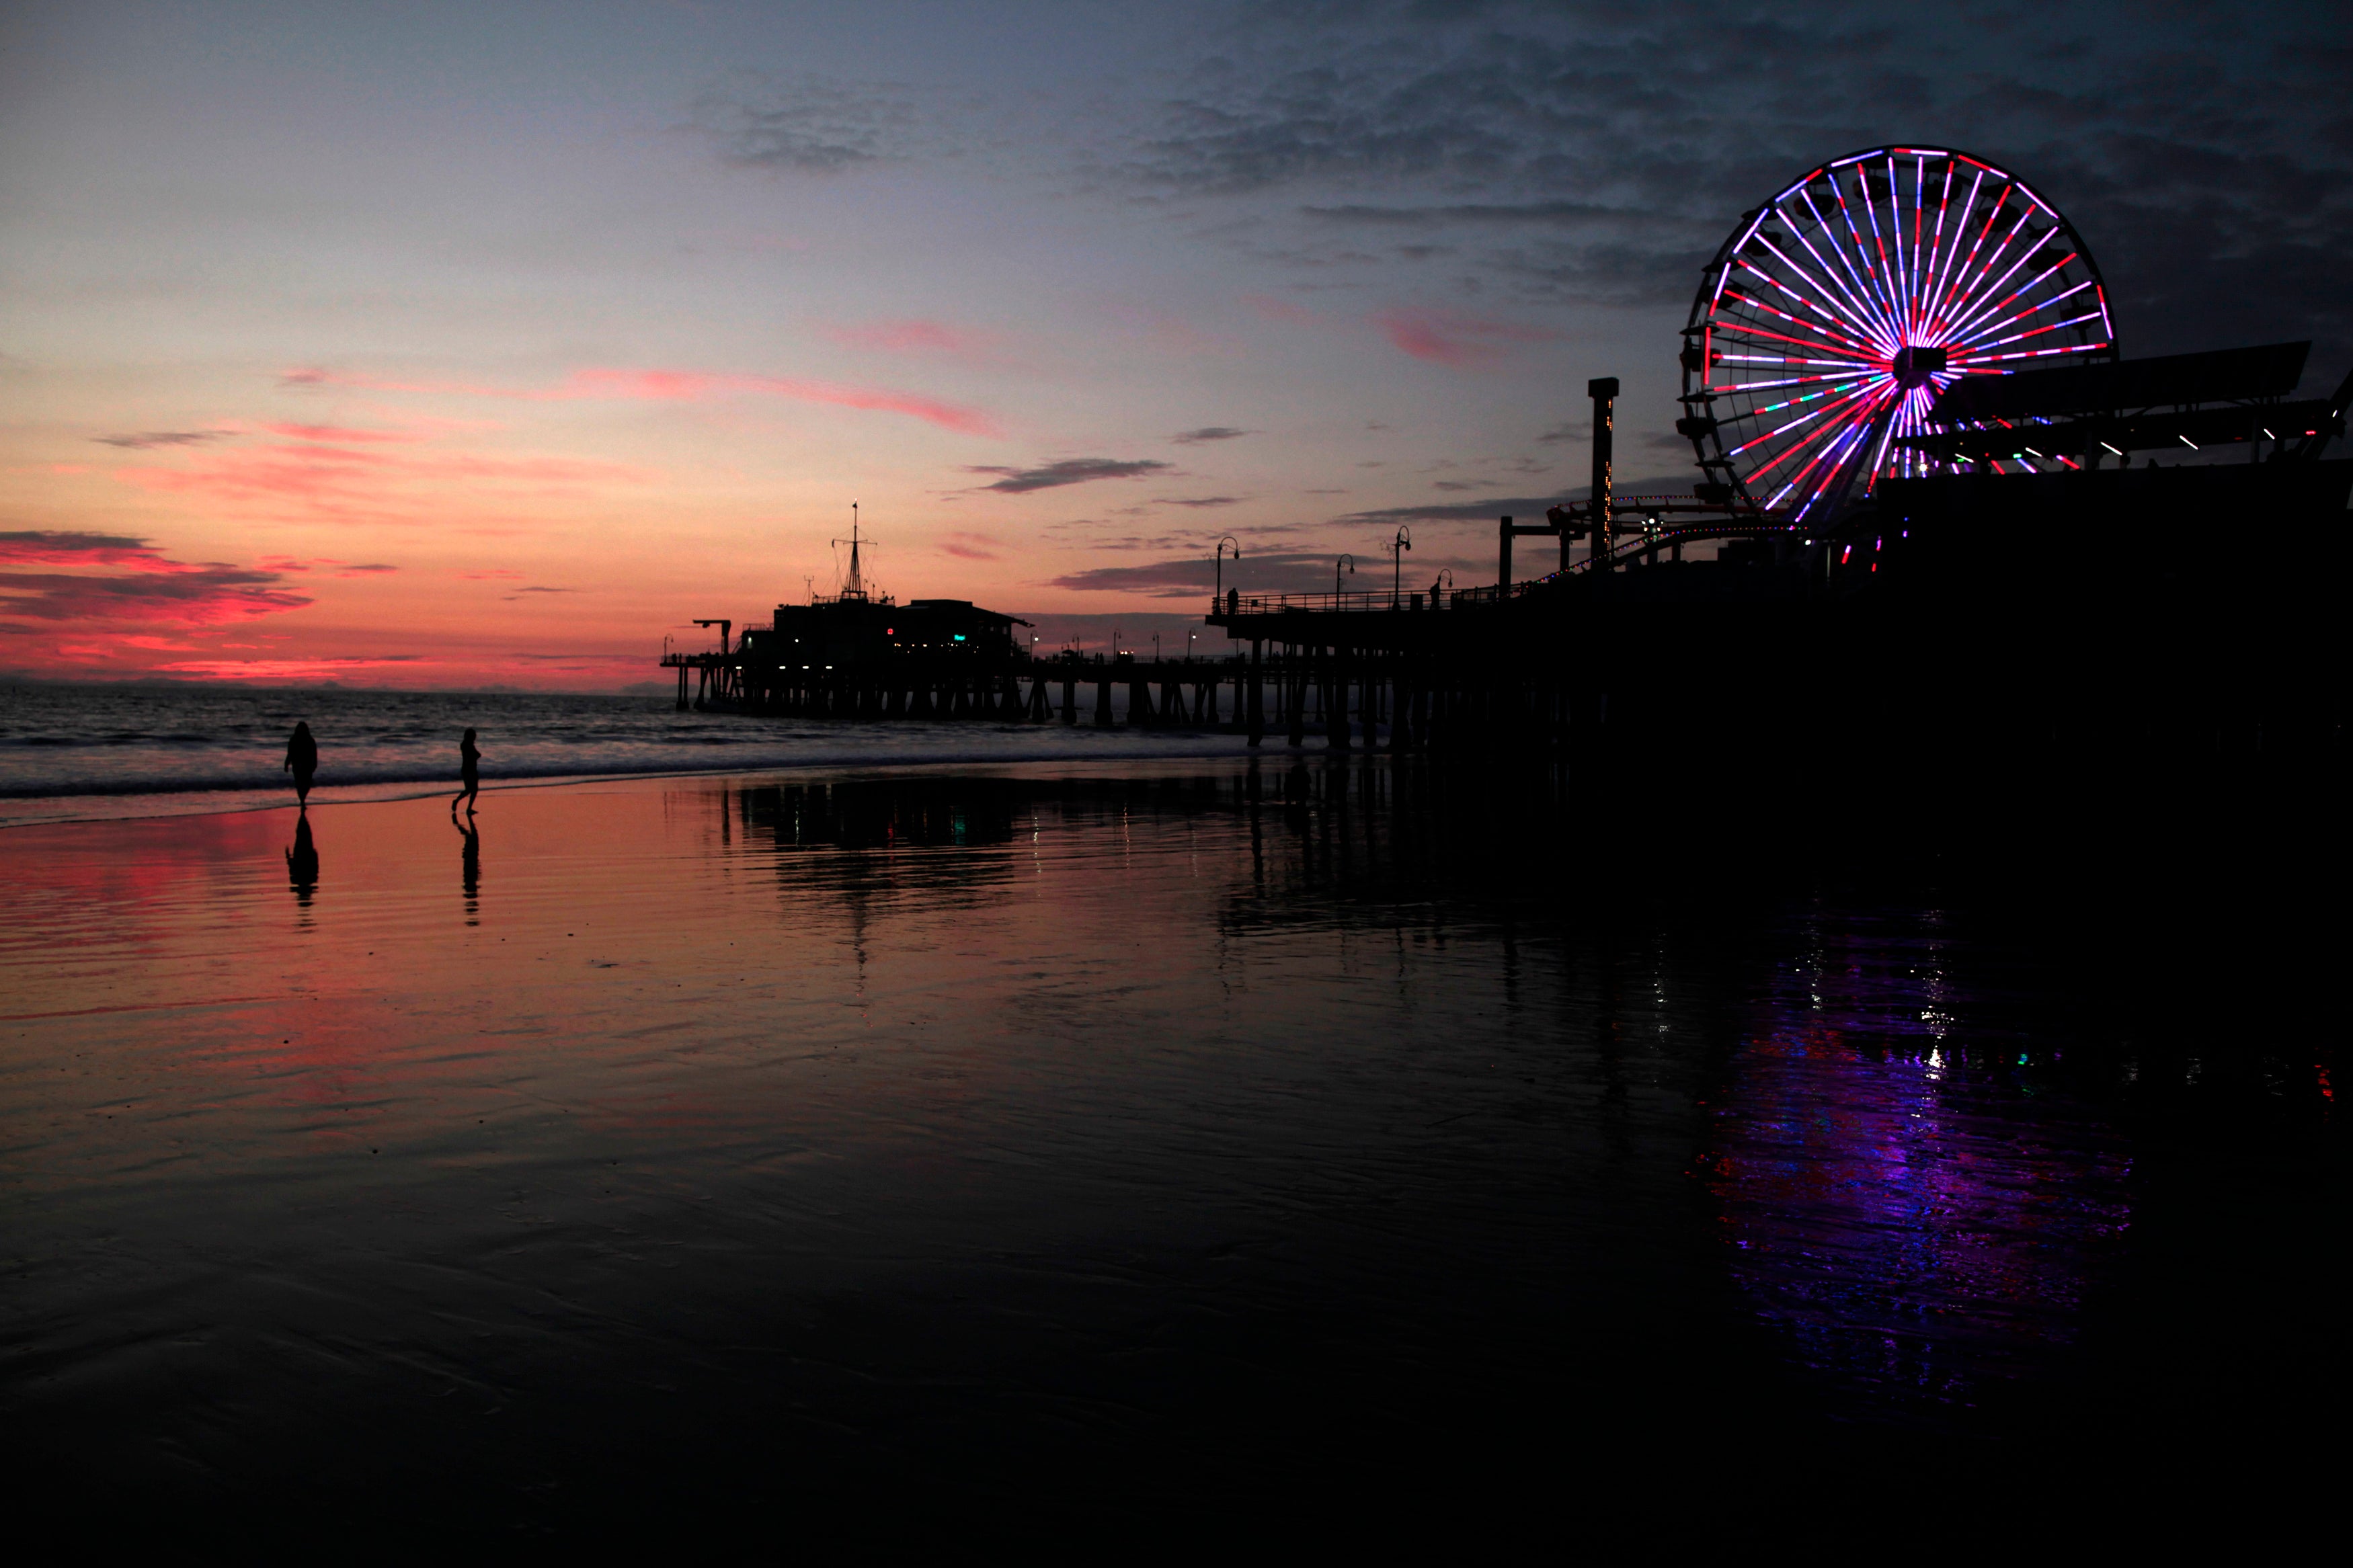 The Santa Monica pier seen in silhouette.